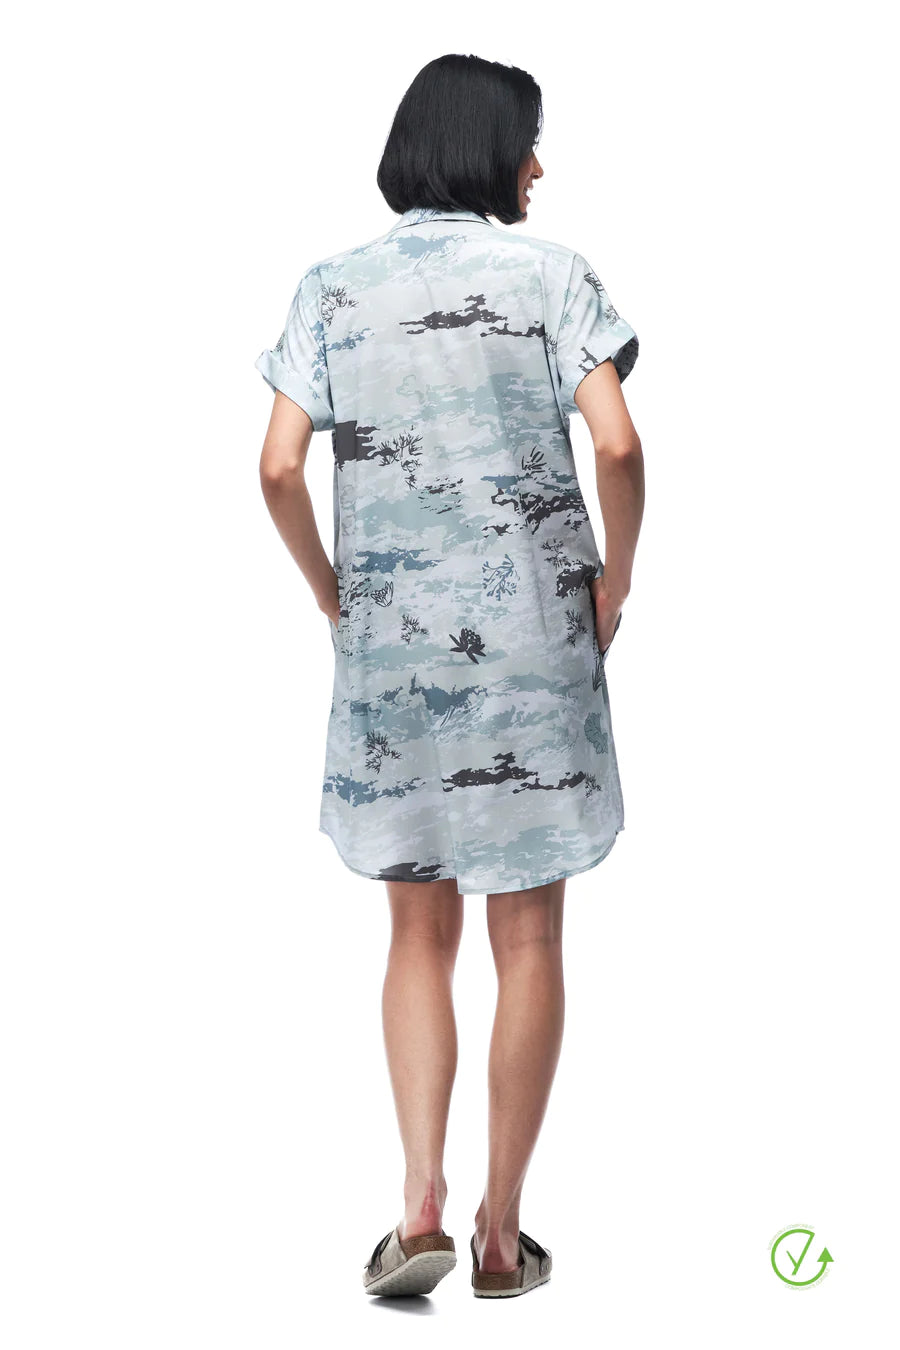 Indyeva Frivol Dress - Pond Botanical Print Clothing - Dresses + Jumpsuits - Dresses - Short Dresses by Indyeva | Grace the Boutique